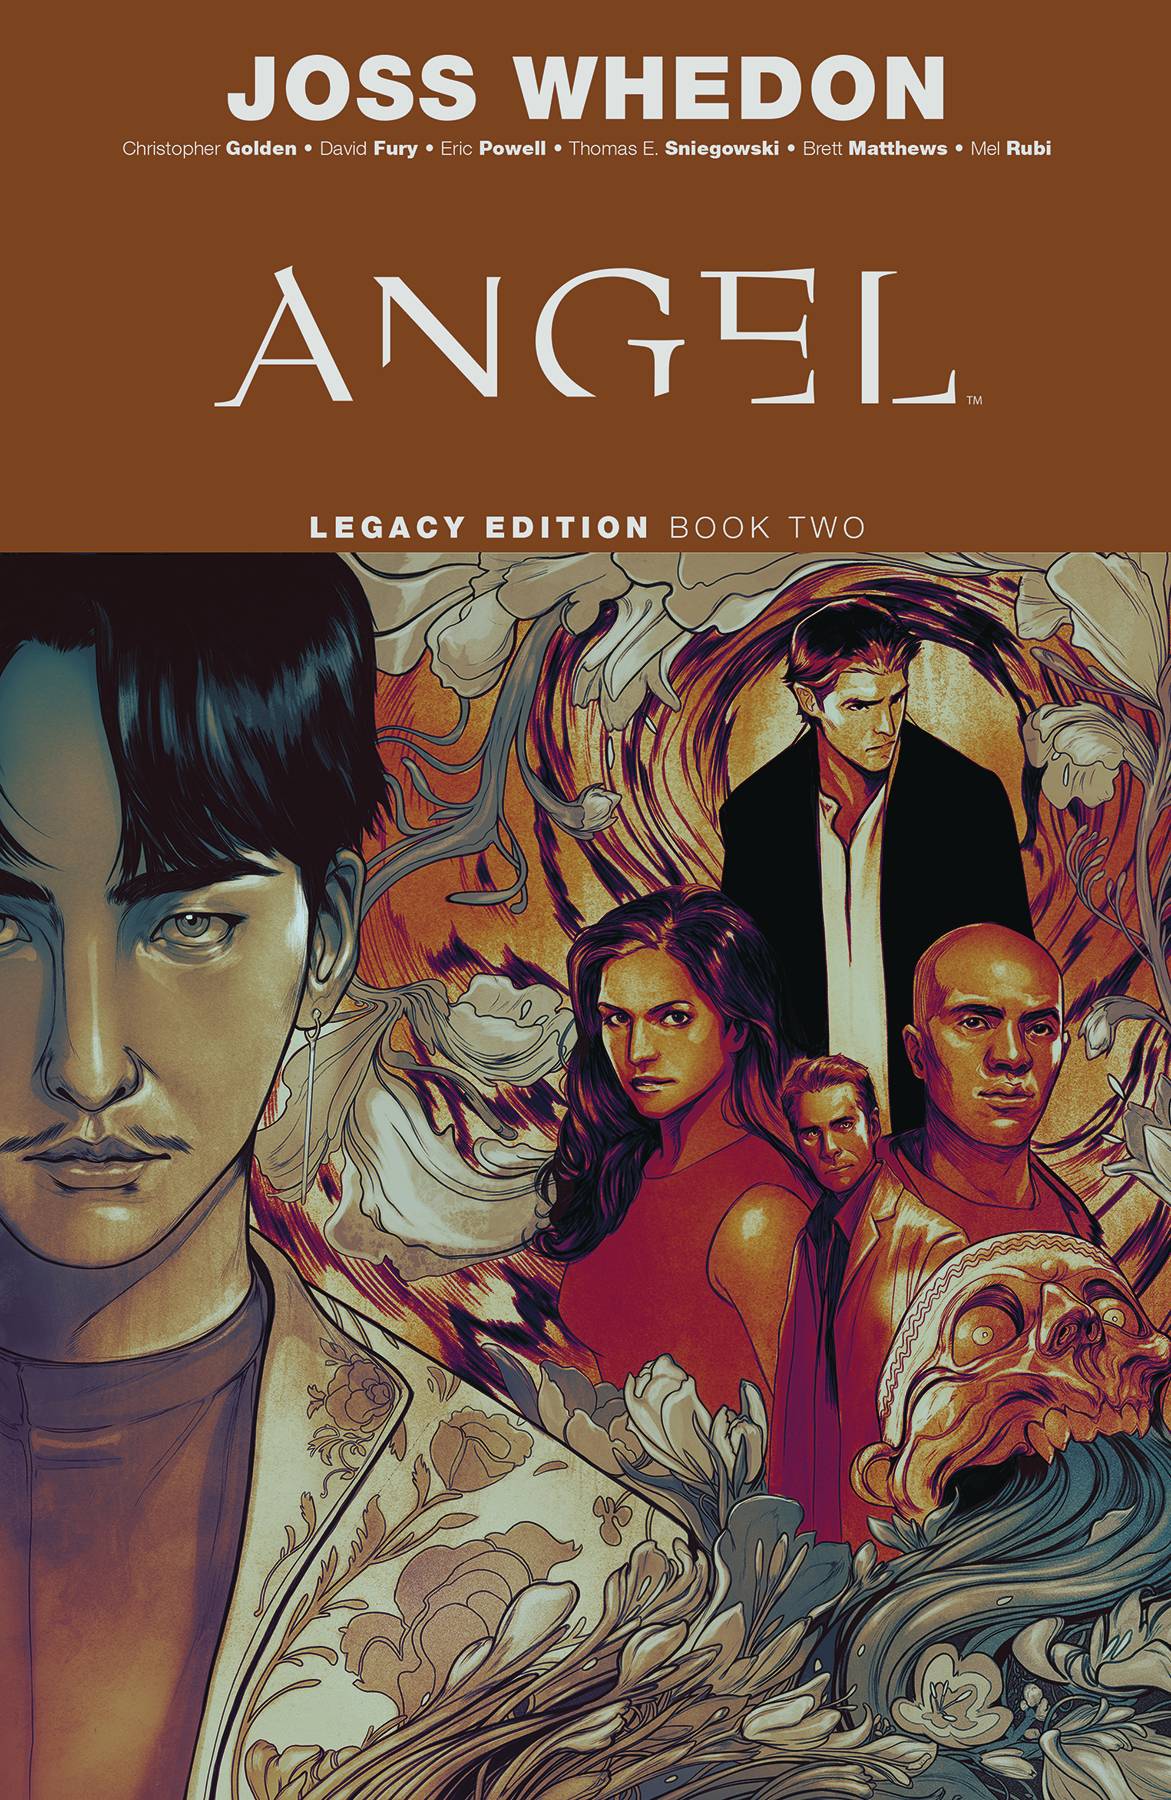 ANGEL LEGACY EDITION BOOK TWO - Third Eye